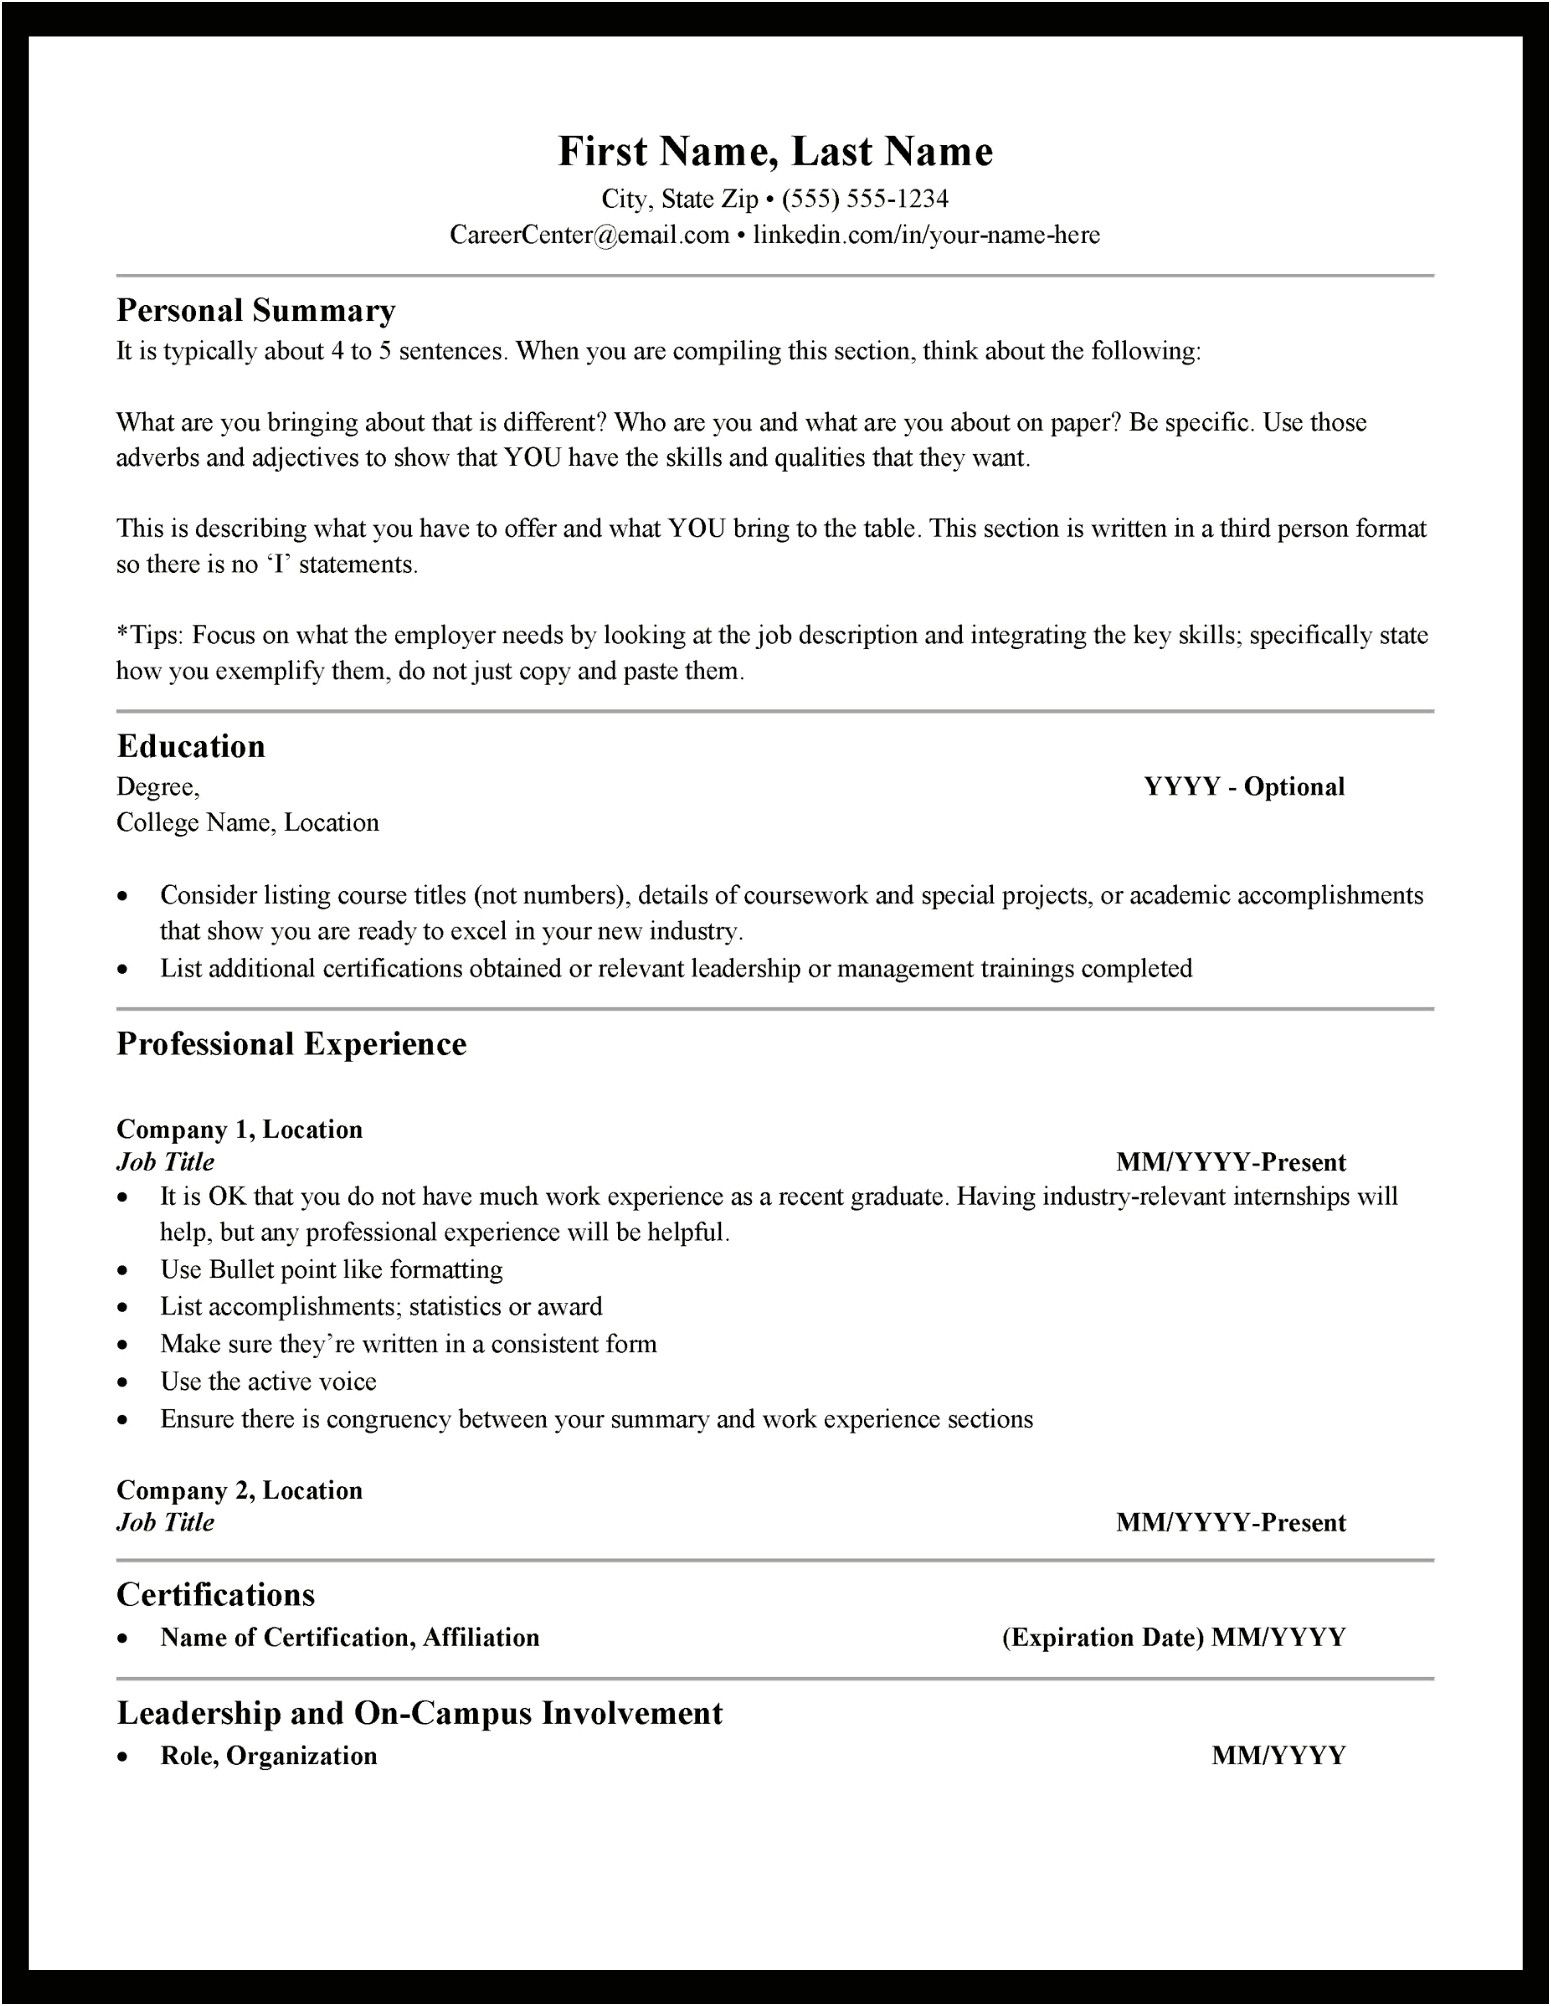 Copy And Paste Job Description In Resume